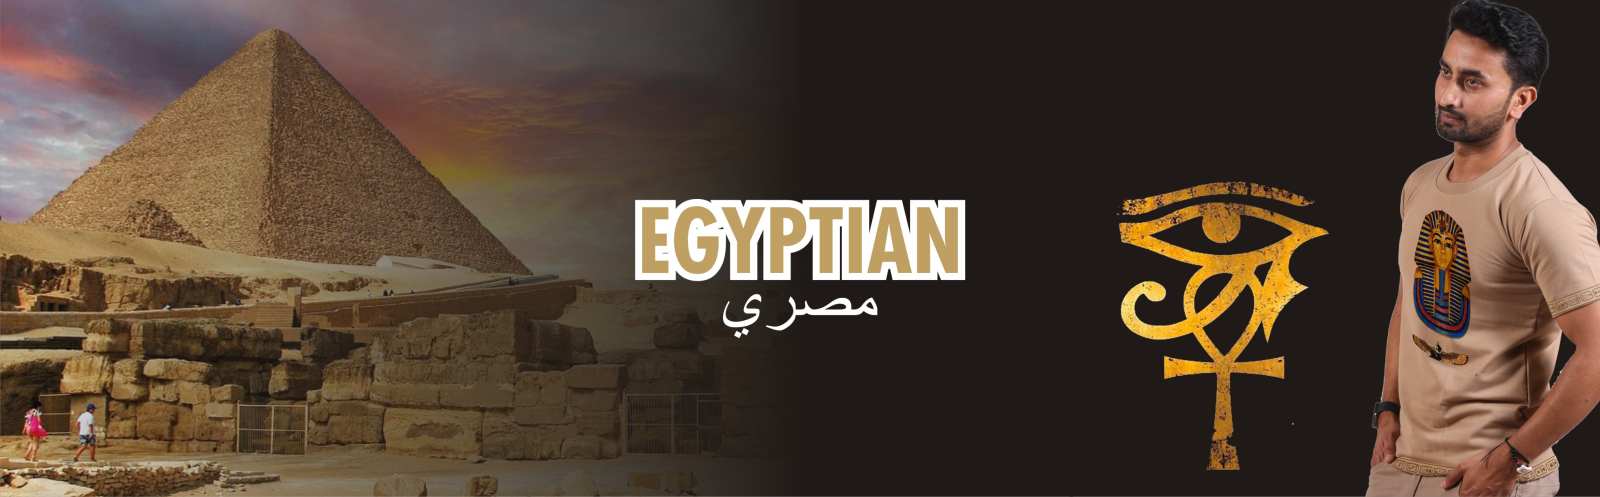 Egyptian (1)